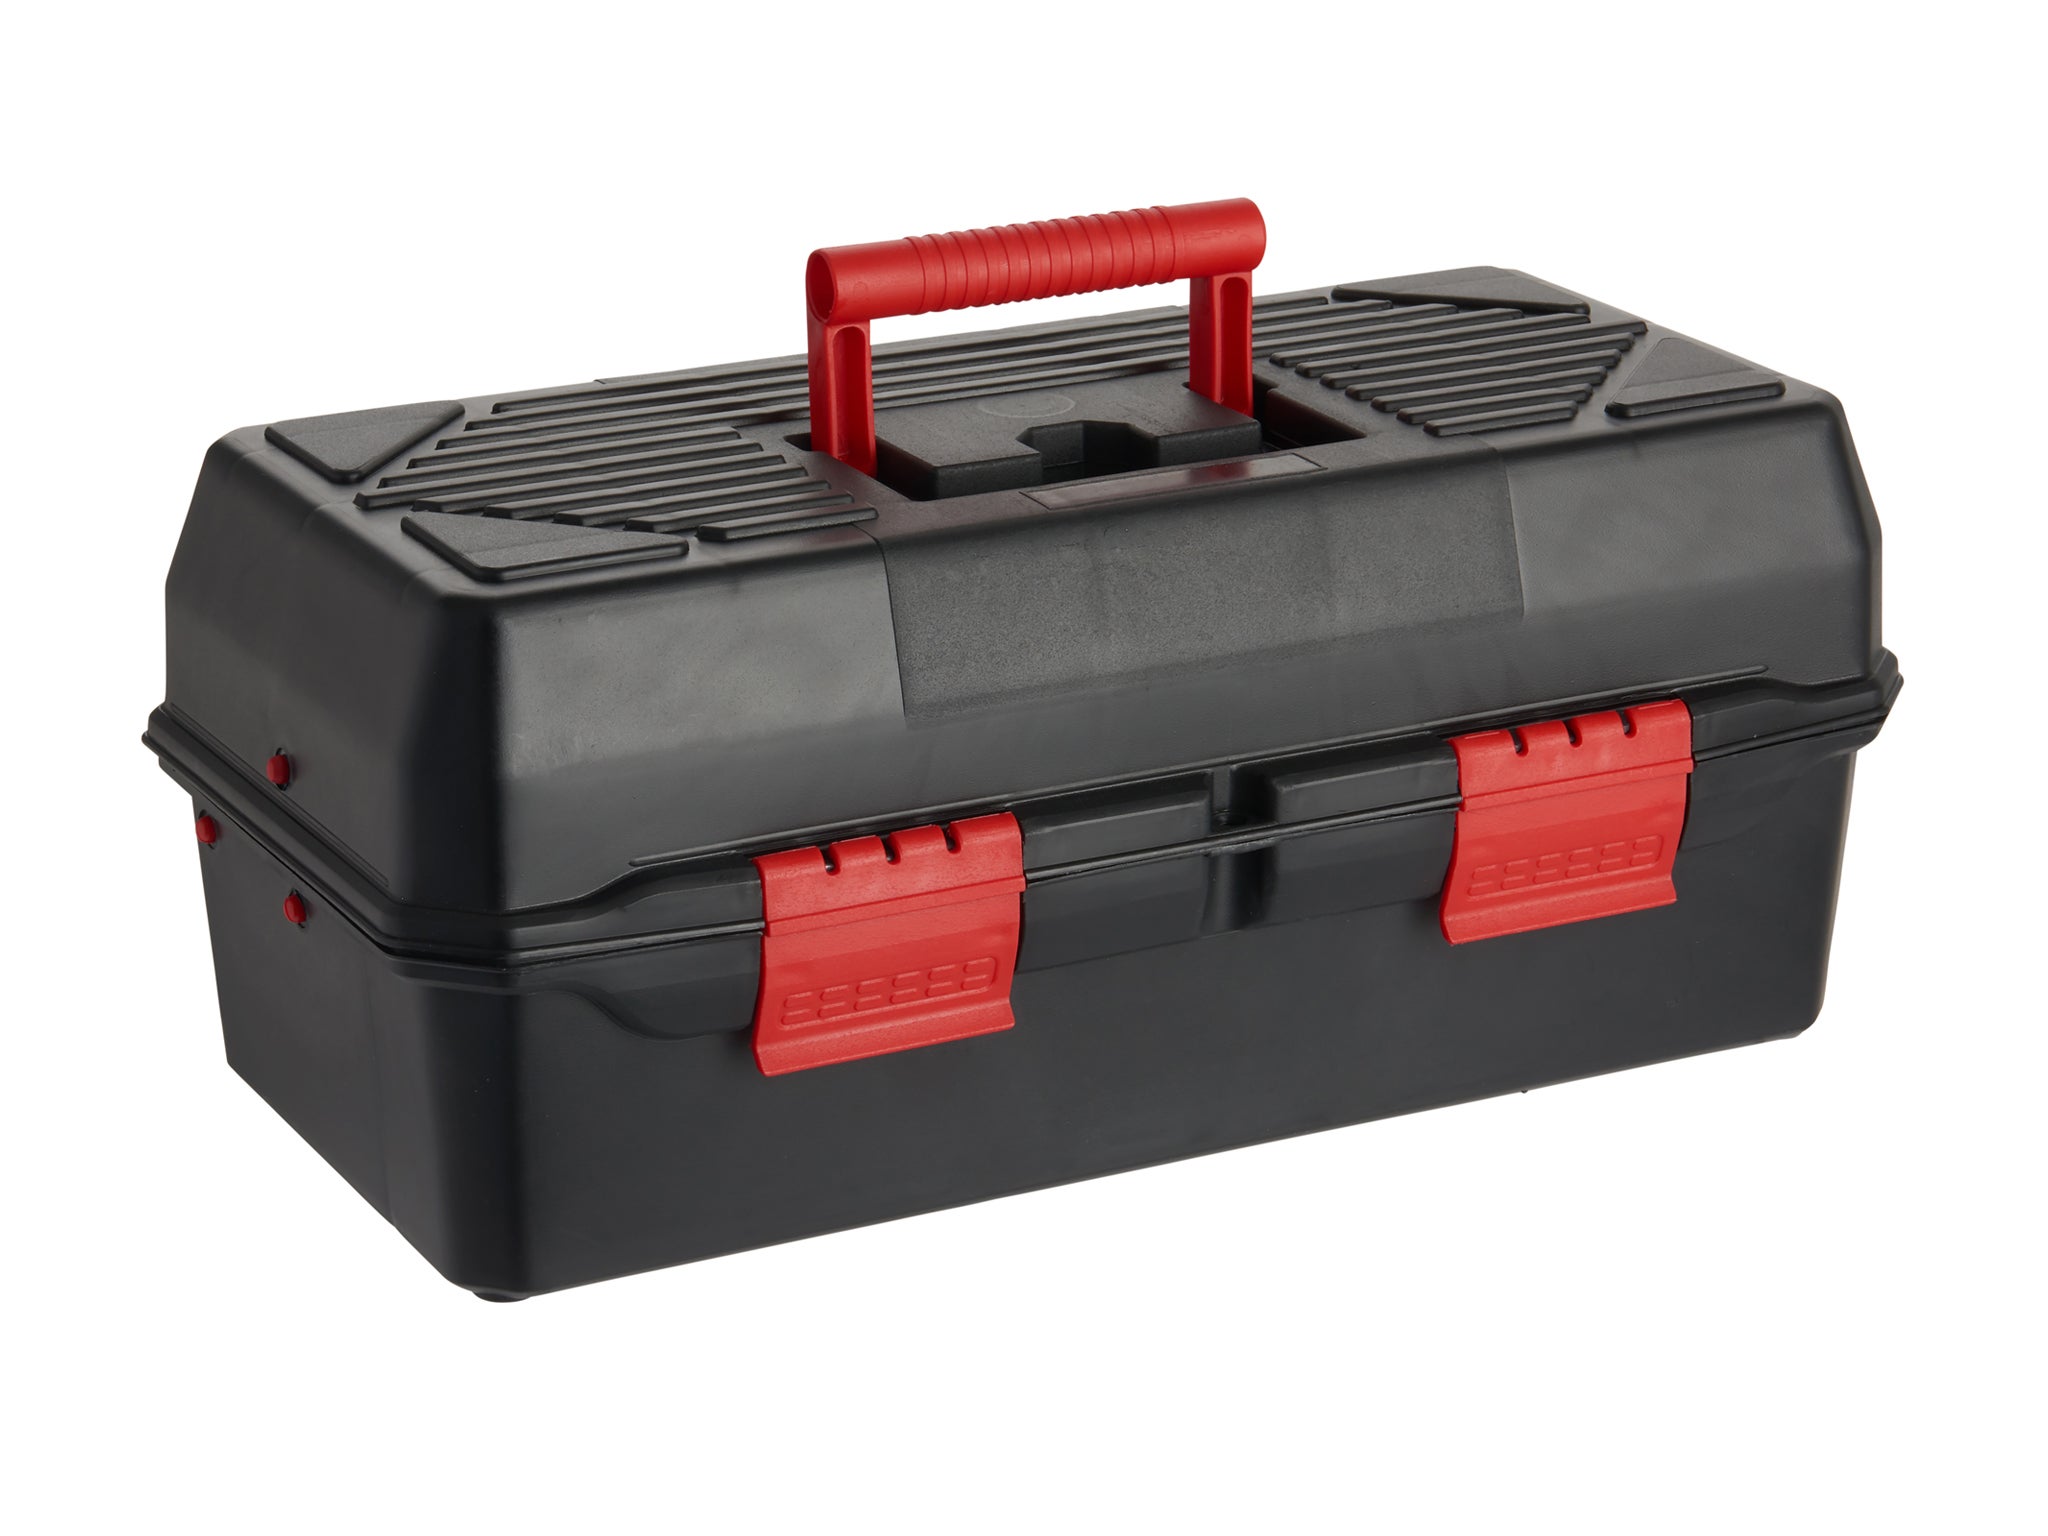 KOLOTOOL 39PCS Portable Household DIY Hand Tool Set with Case Patriot Edition 